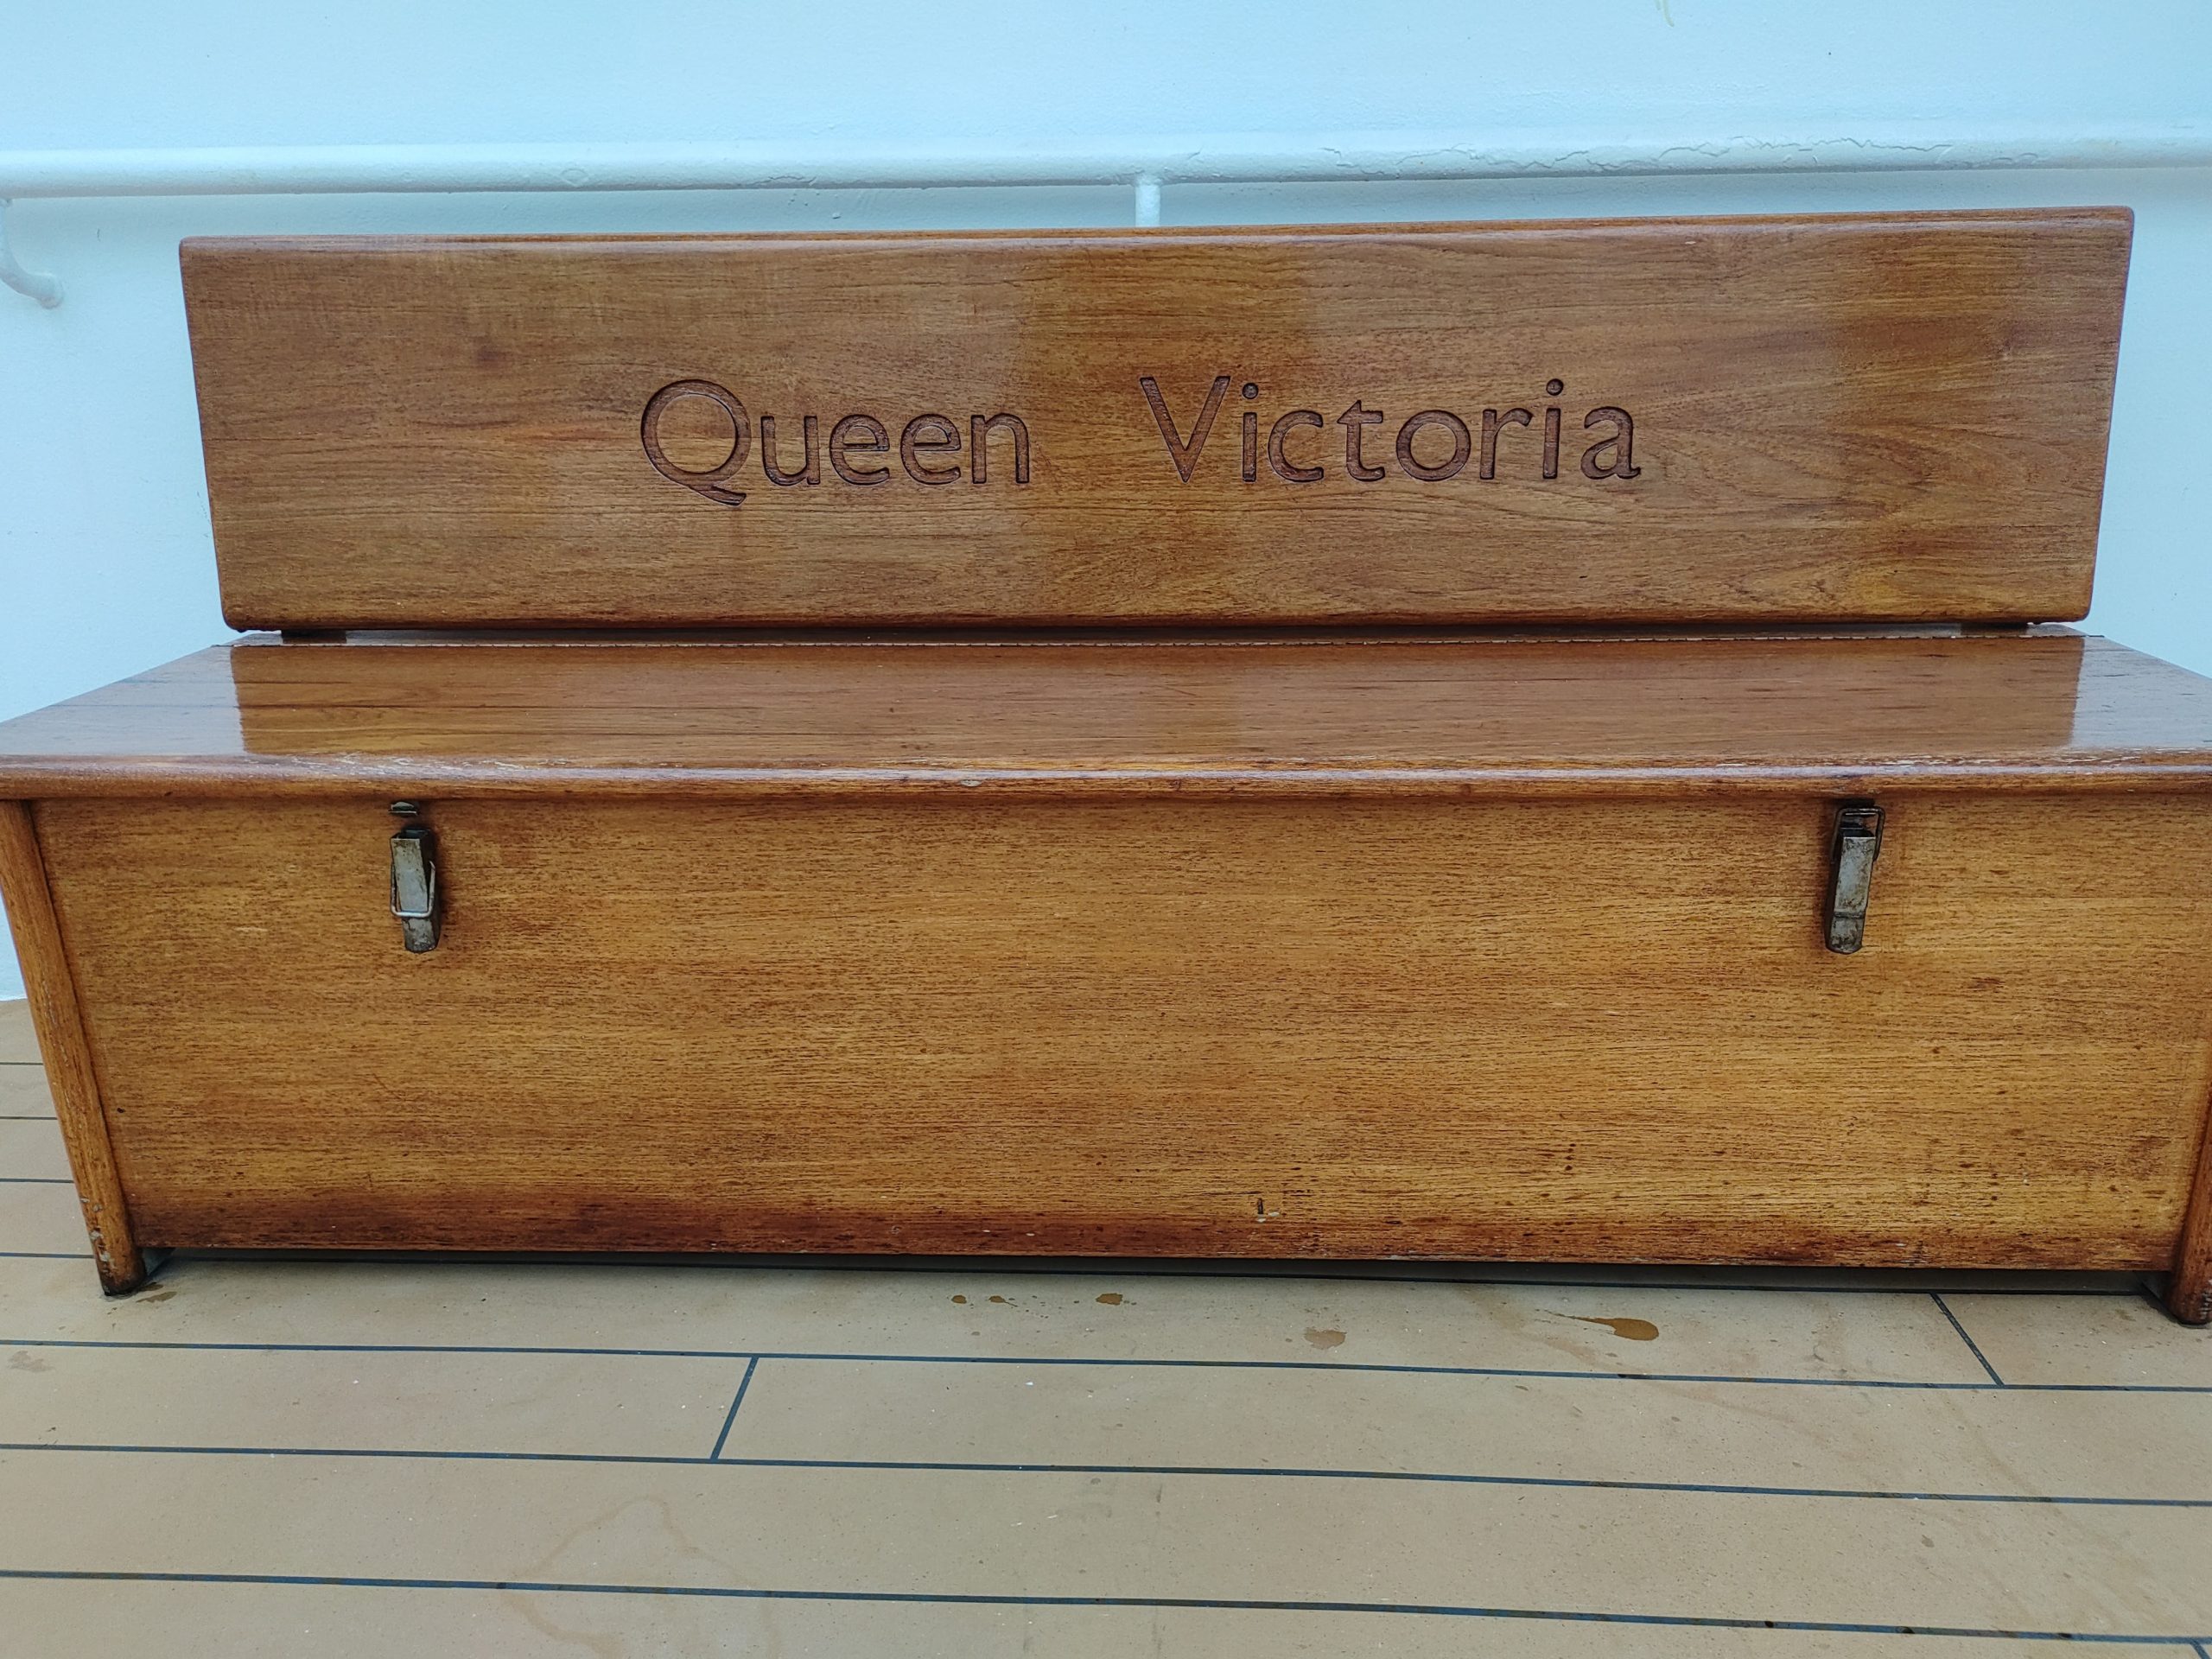 Bench on Queen Victoria